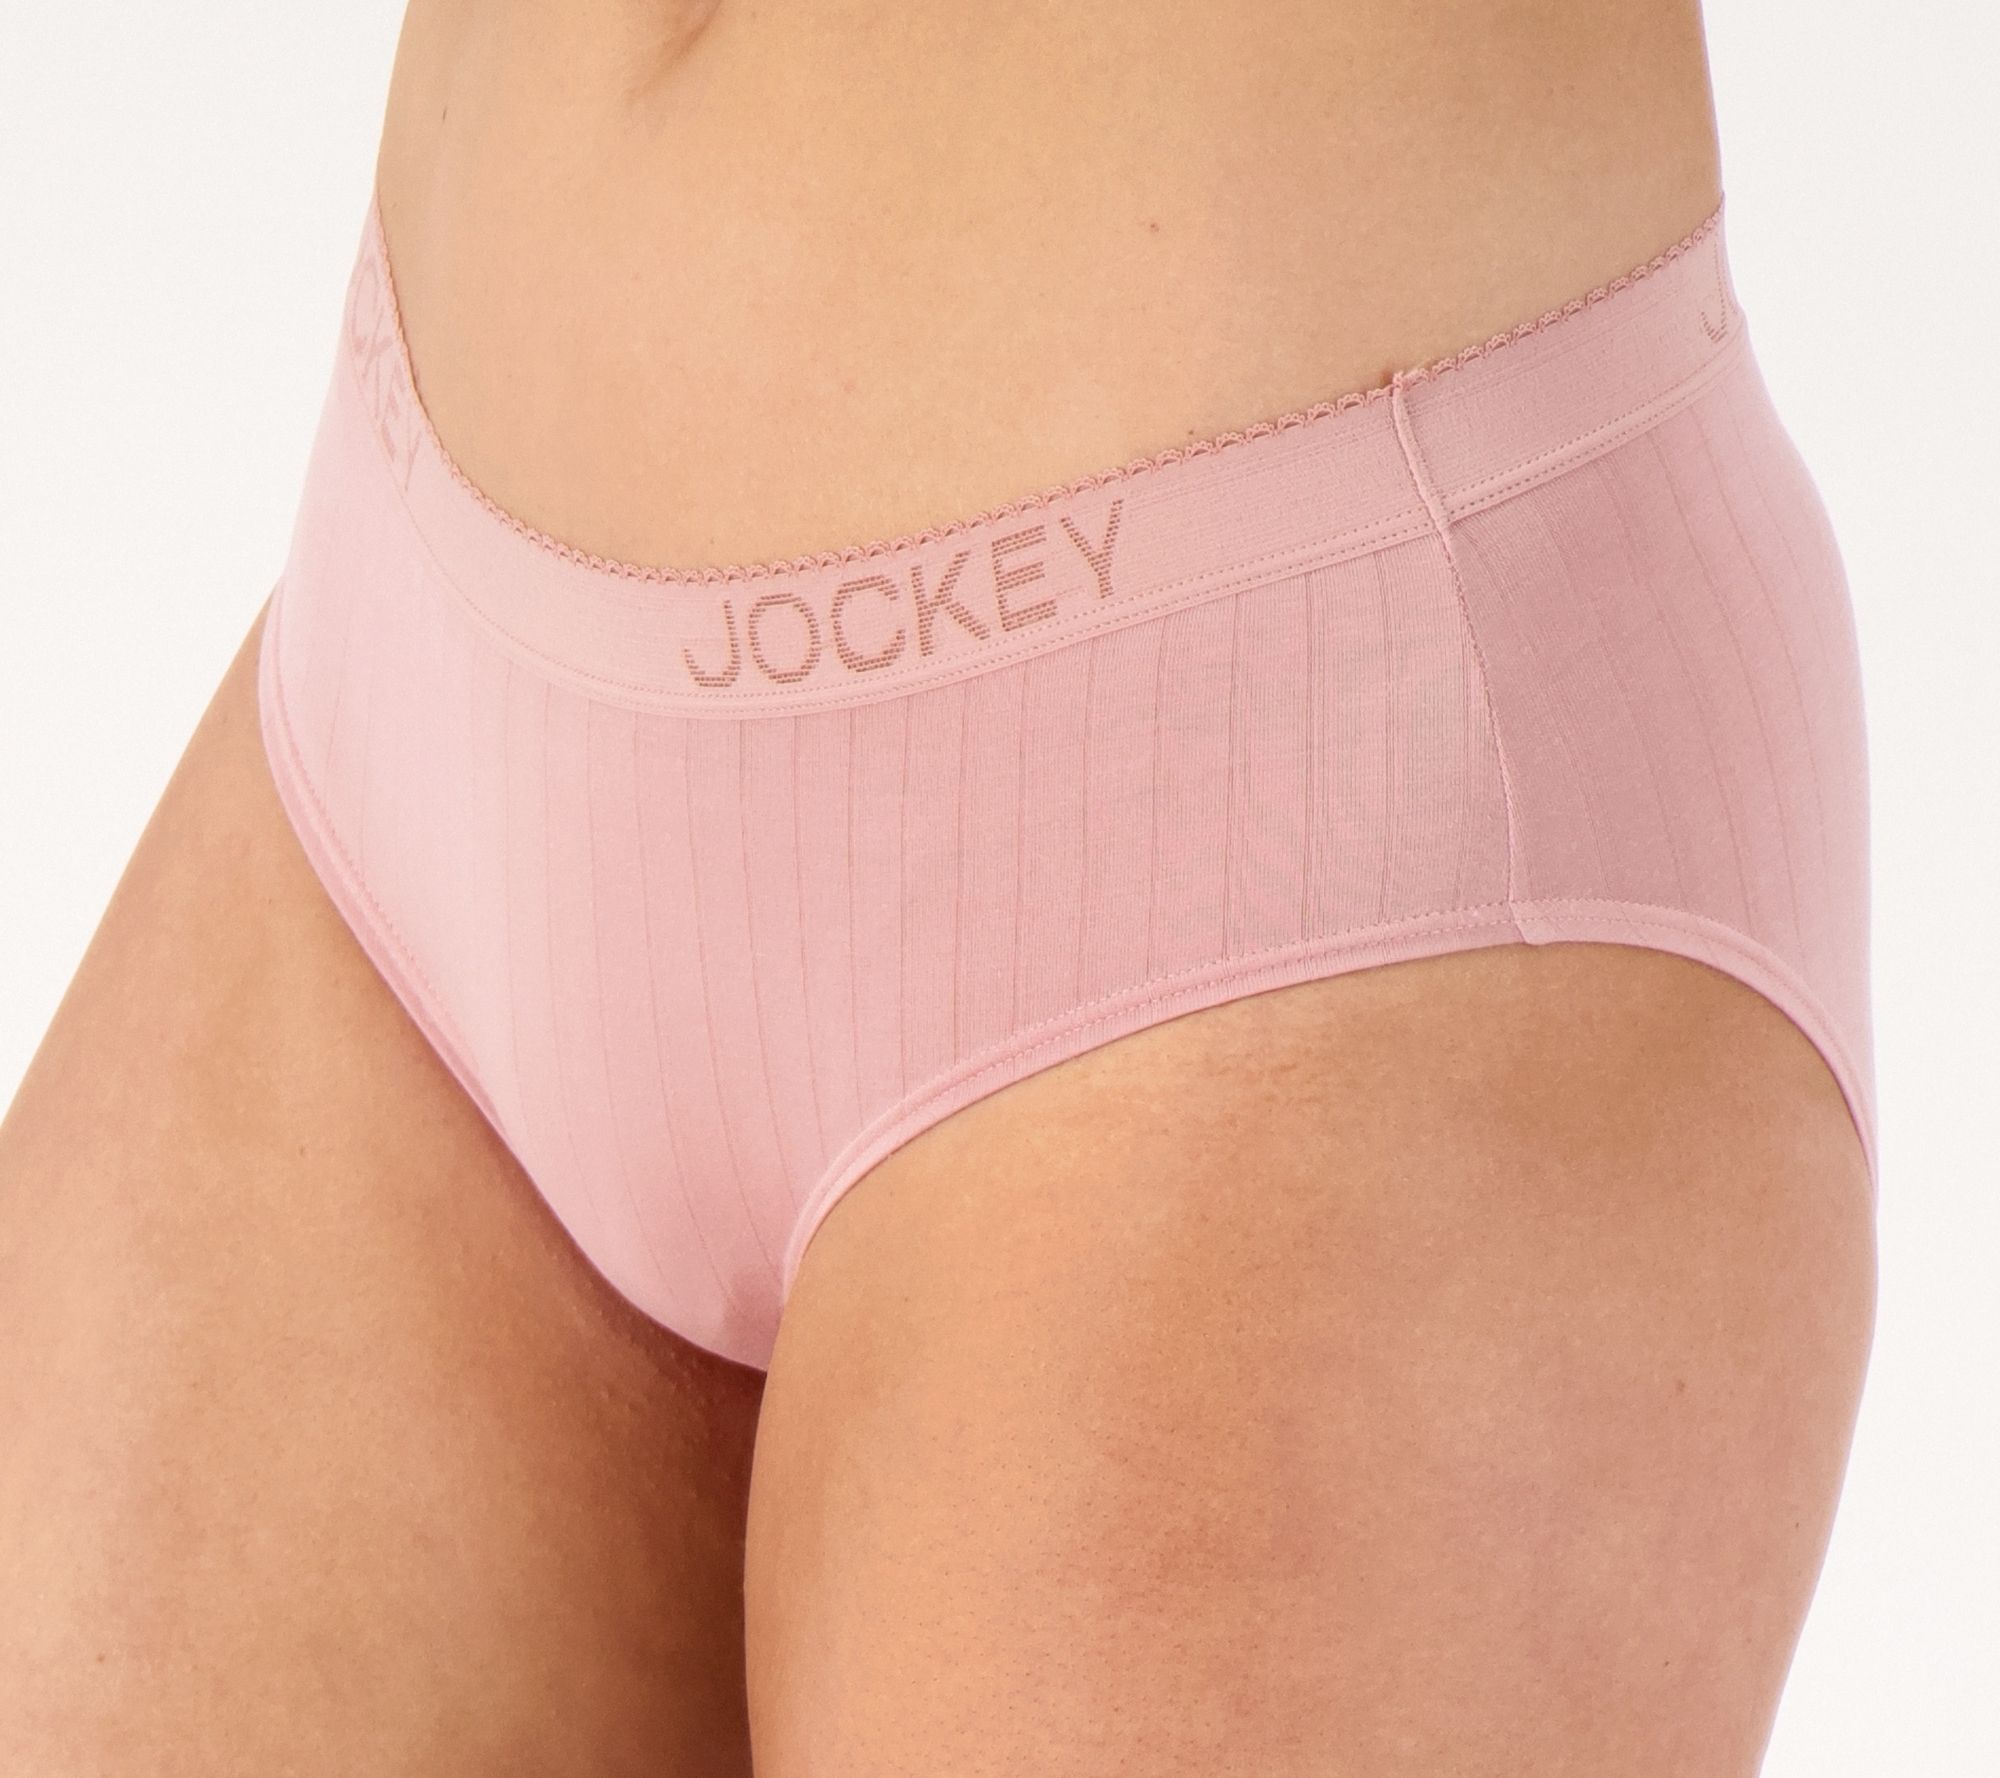 32% off on Jockey 2x Ladies French Cut Panties